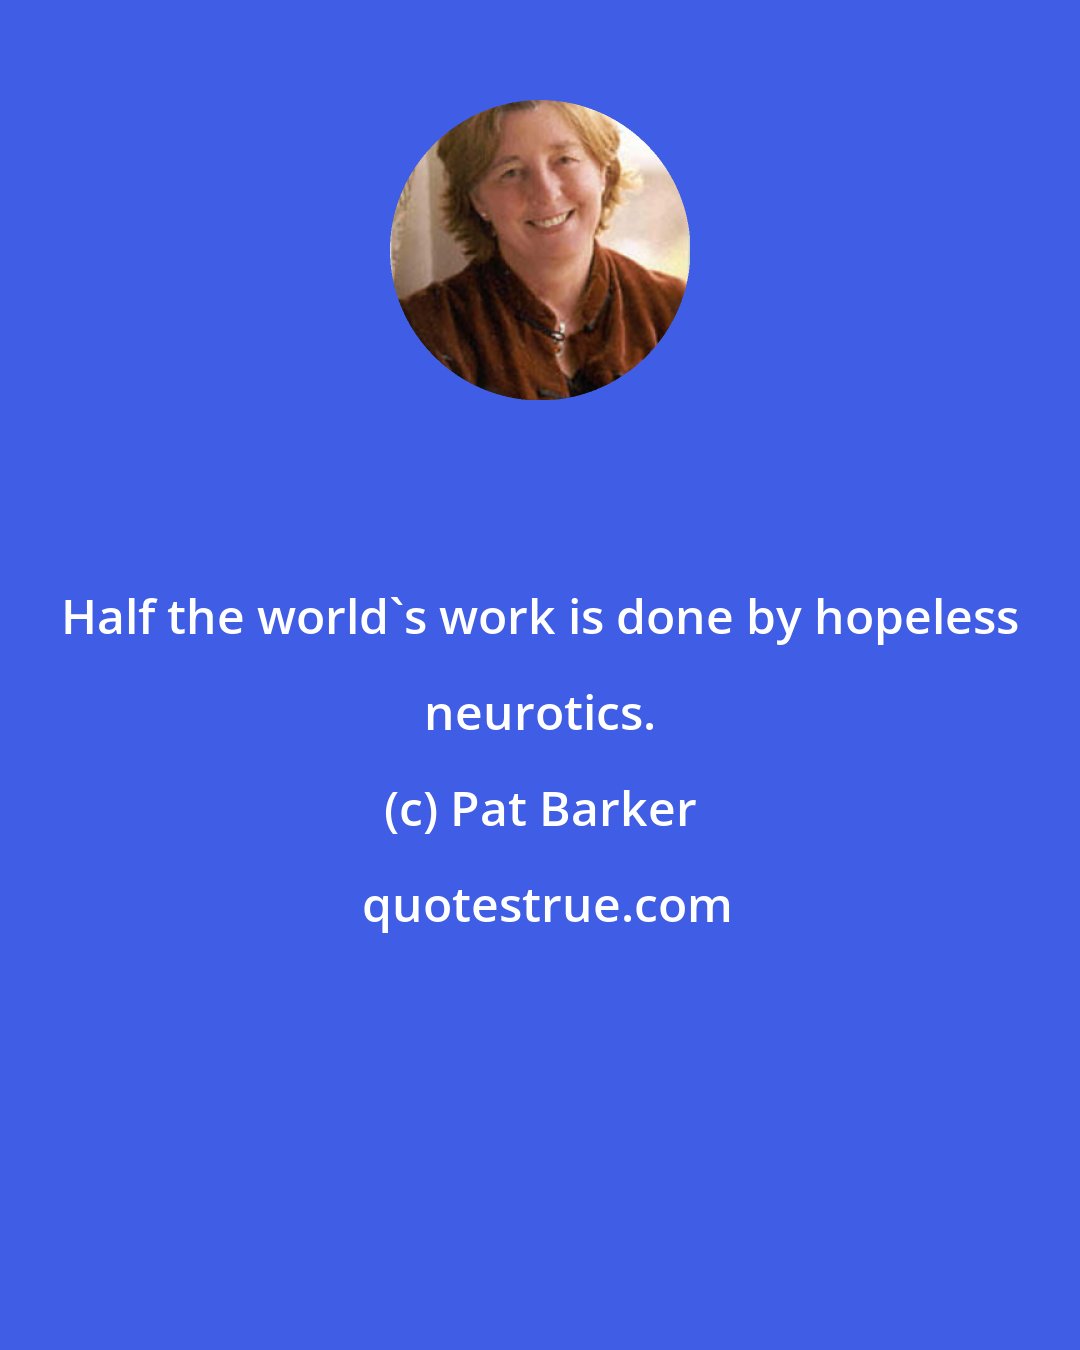 Pat Barker: Half the world's work is done by hopeless neurotics.